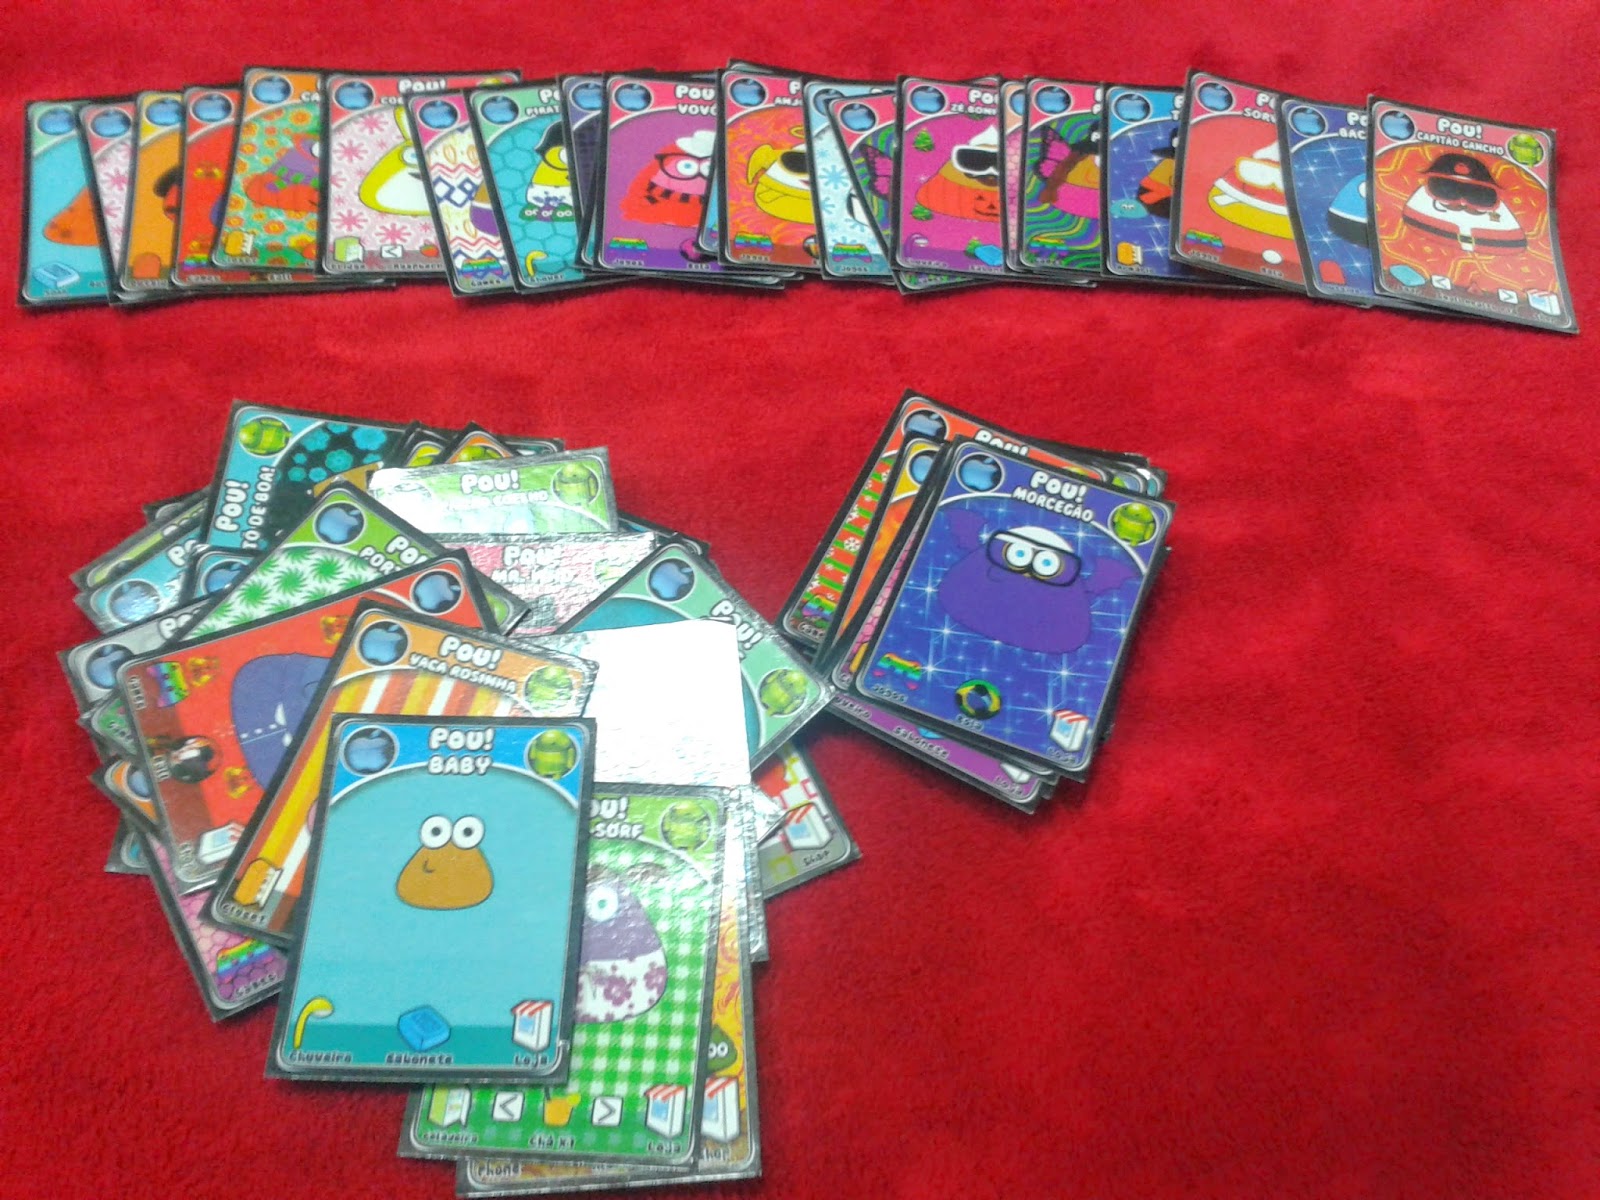 Planeta Pou: Cards do Pou!!